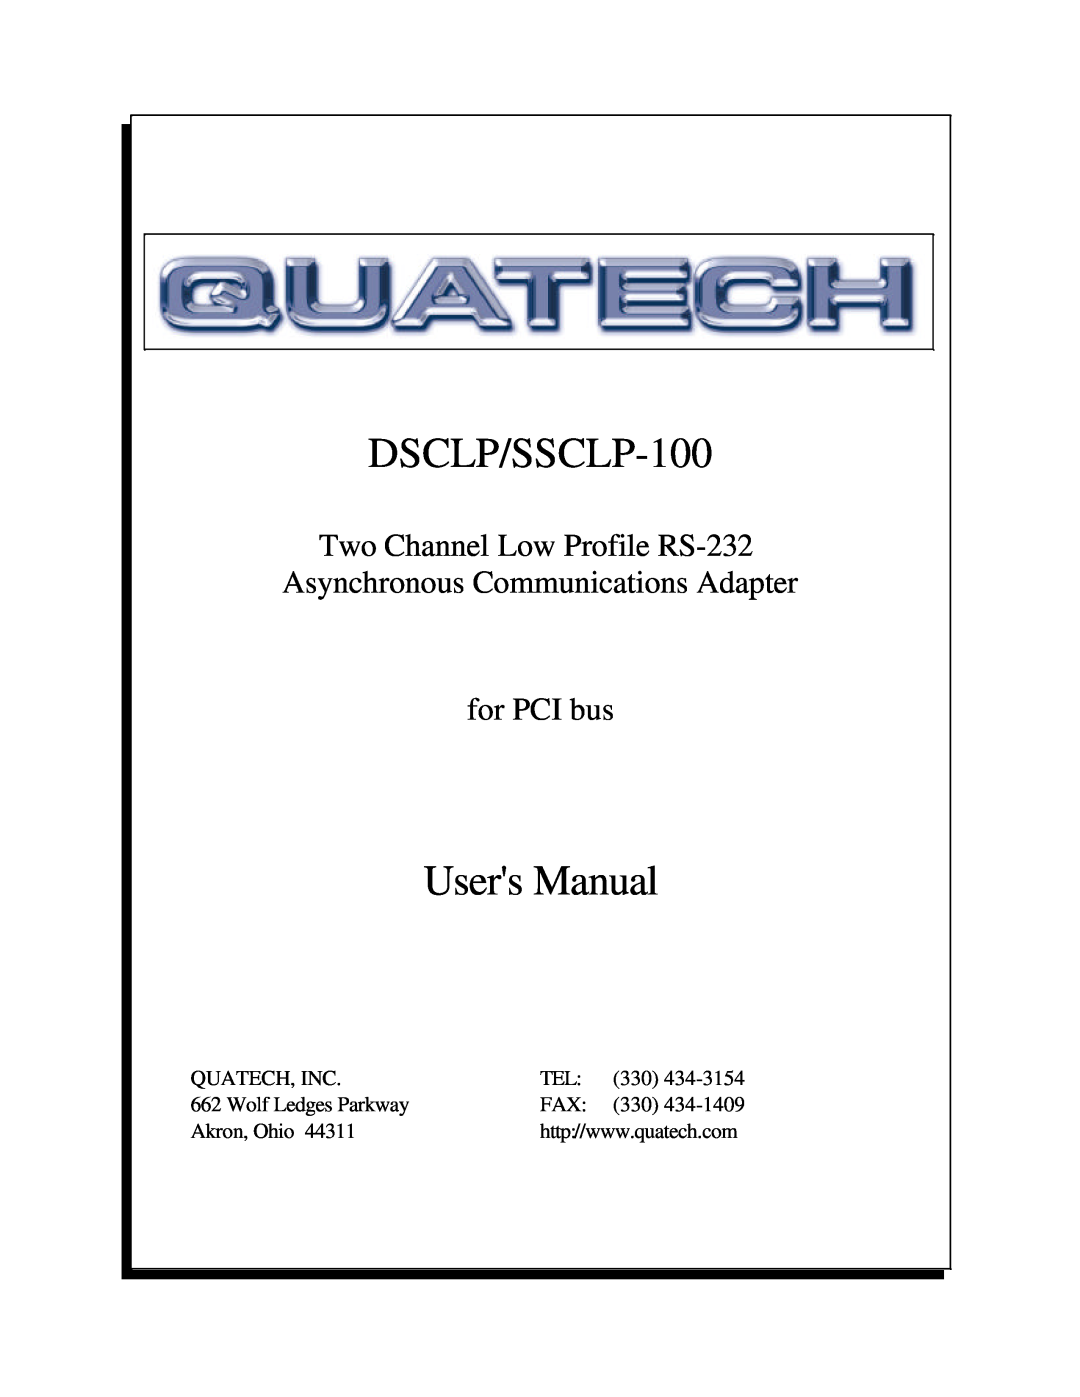 Quatech DSCLP-100 user manual DSCLP/SSCLP-100, Two Channel Low Profile RS-232 Asynchronous Communications Adapter 